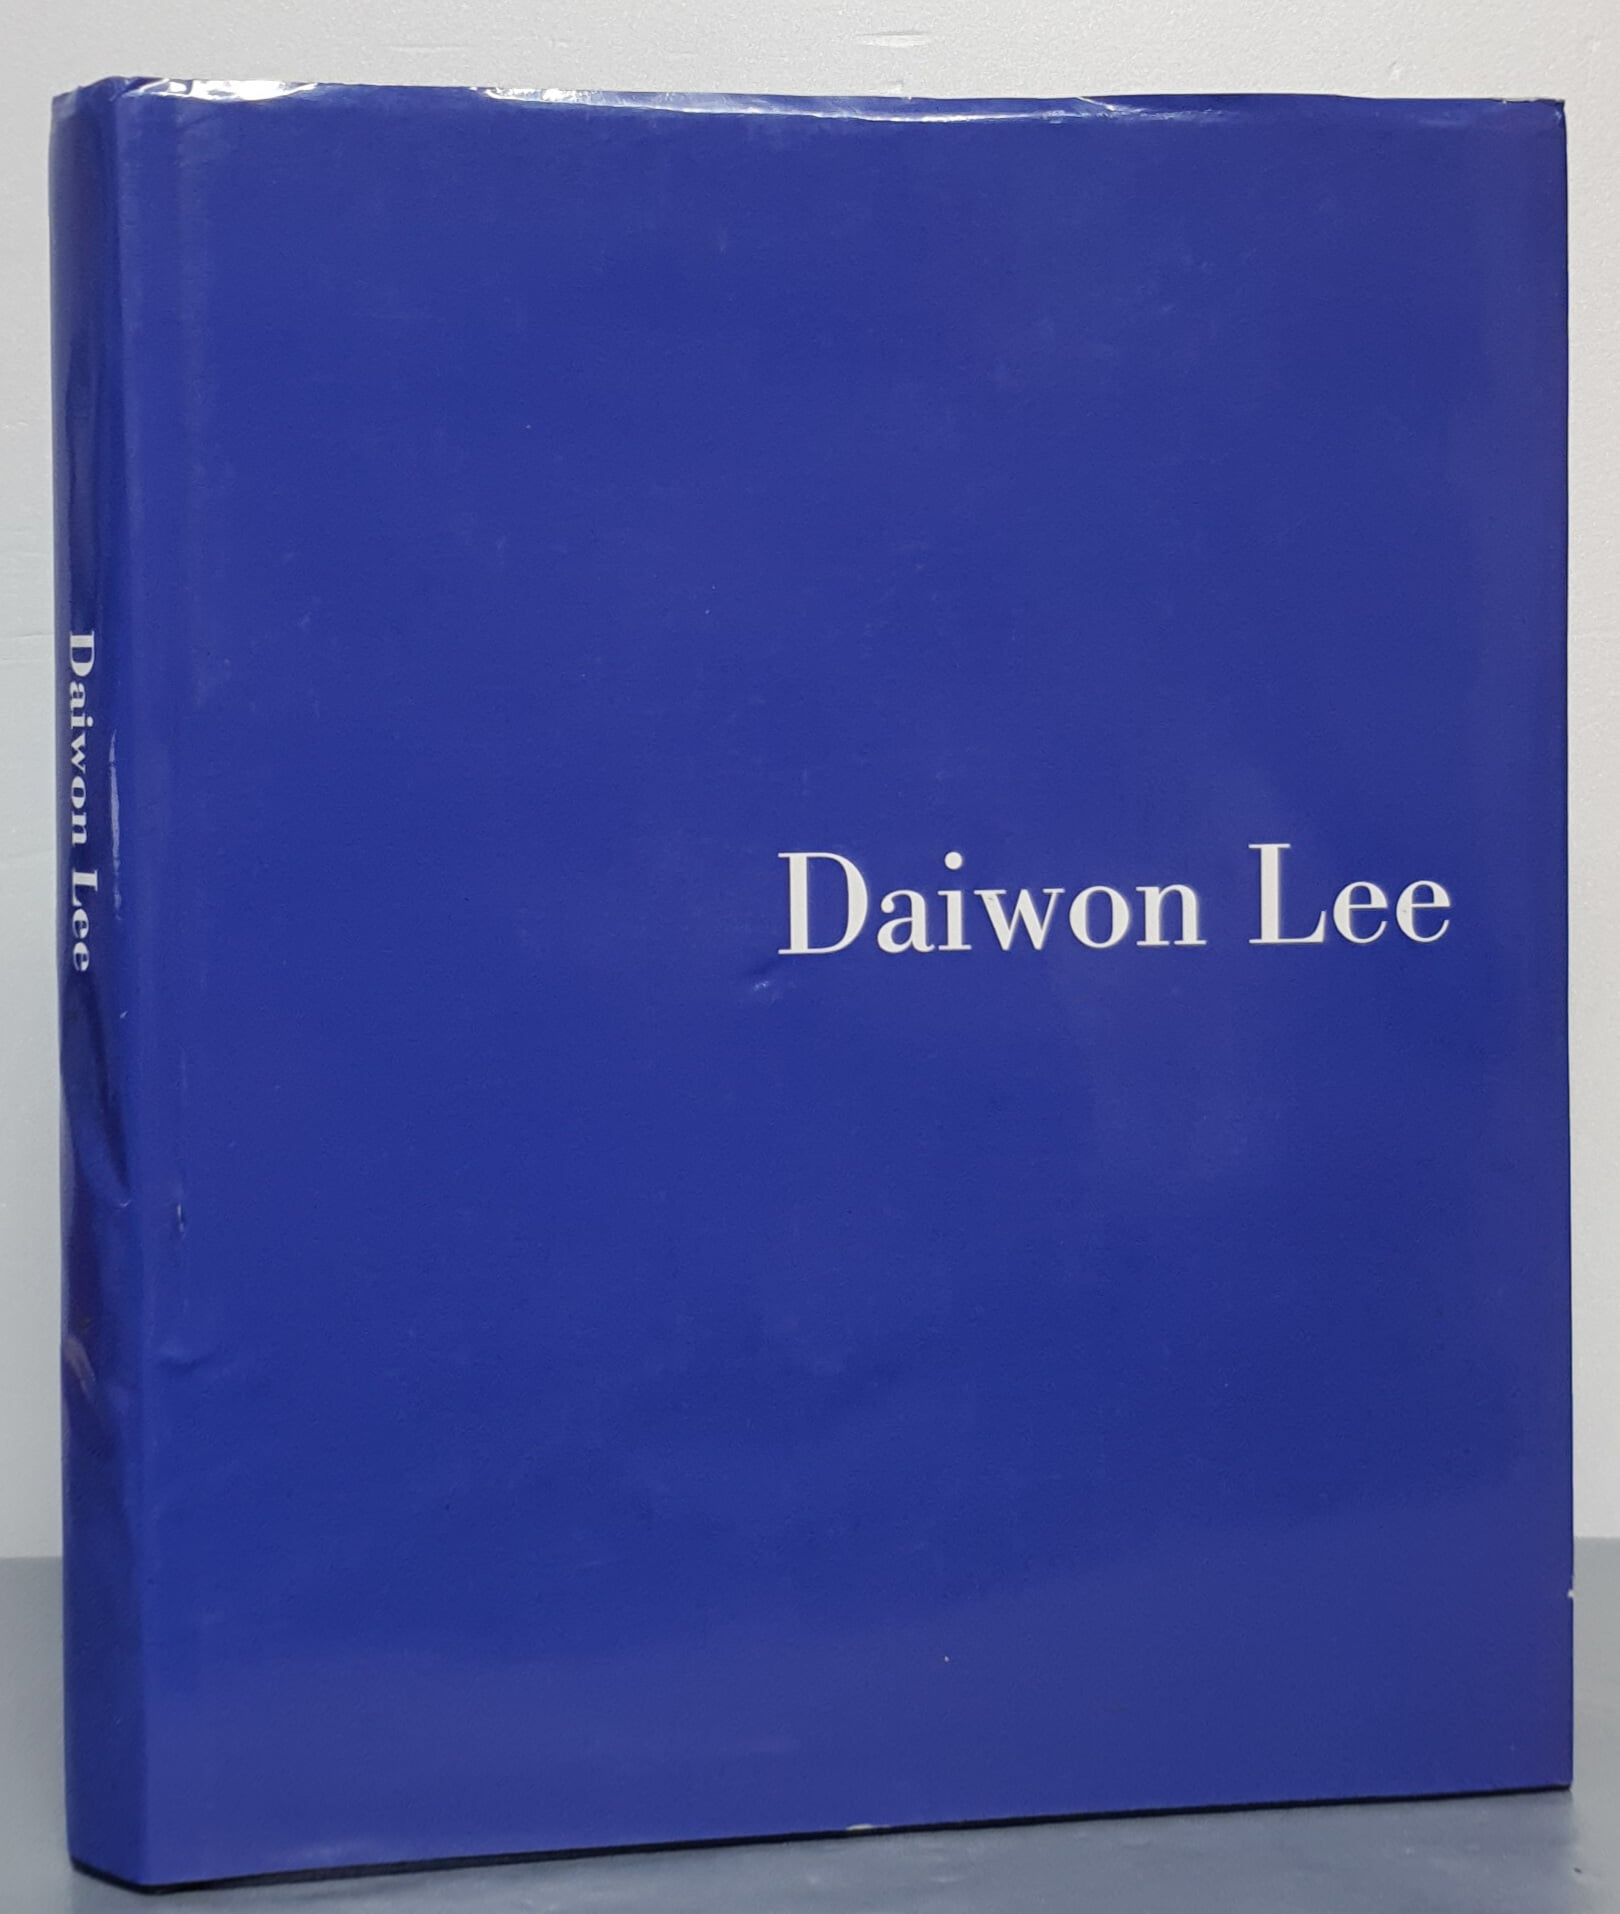 Daiwon Lee 이대원 화집 (2000부 한정판)